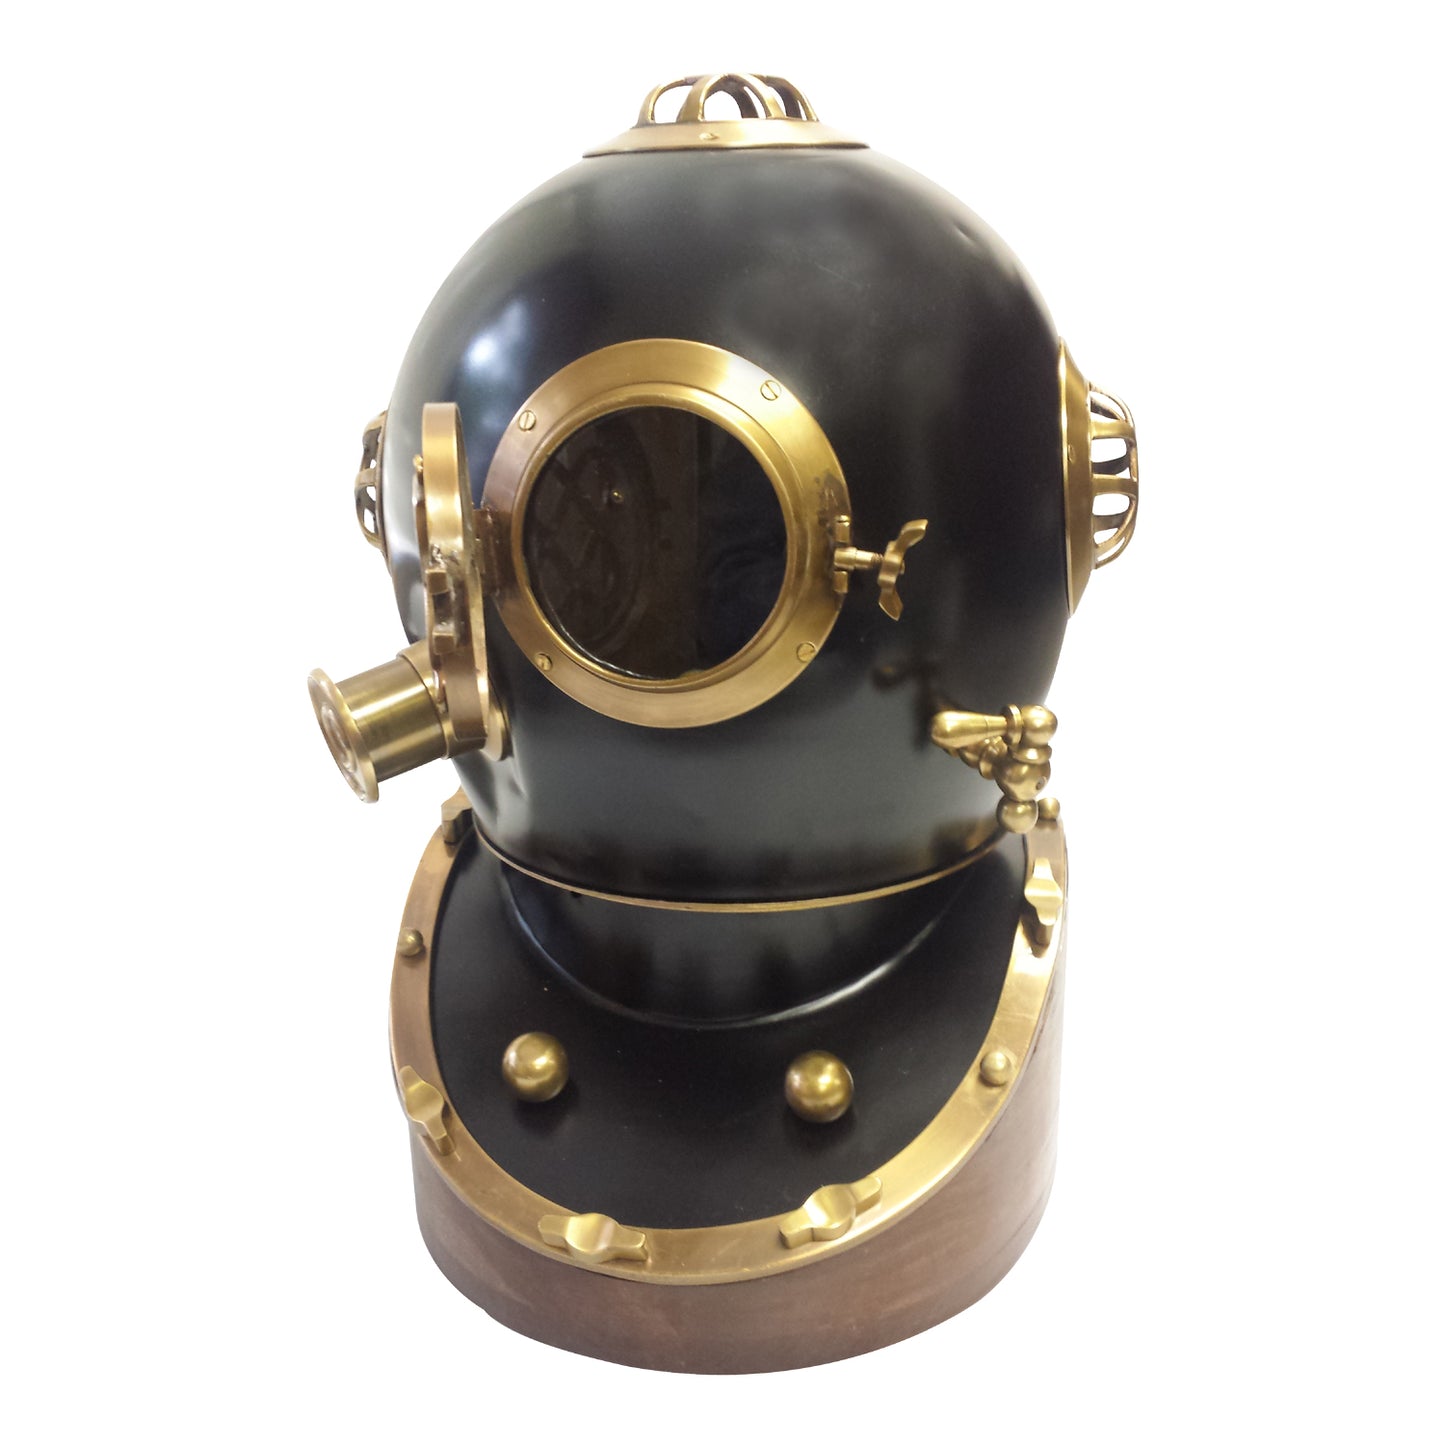 GiftBay Decorative Brass Diving Helmet, 17" Length x 13" Width